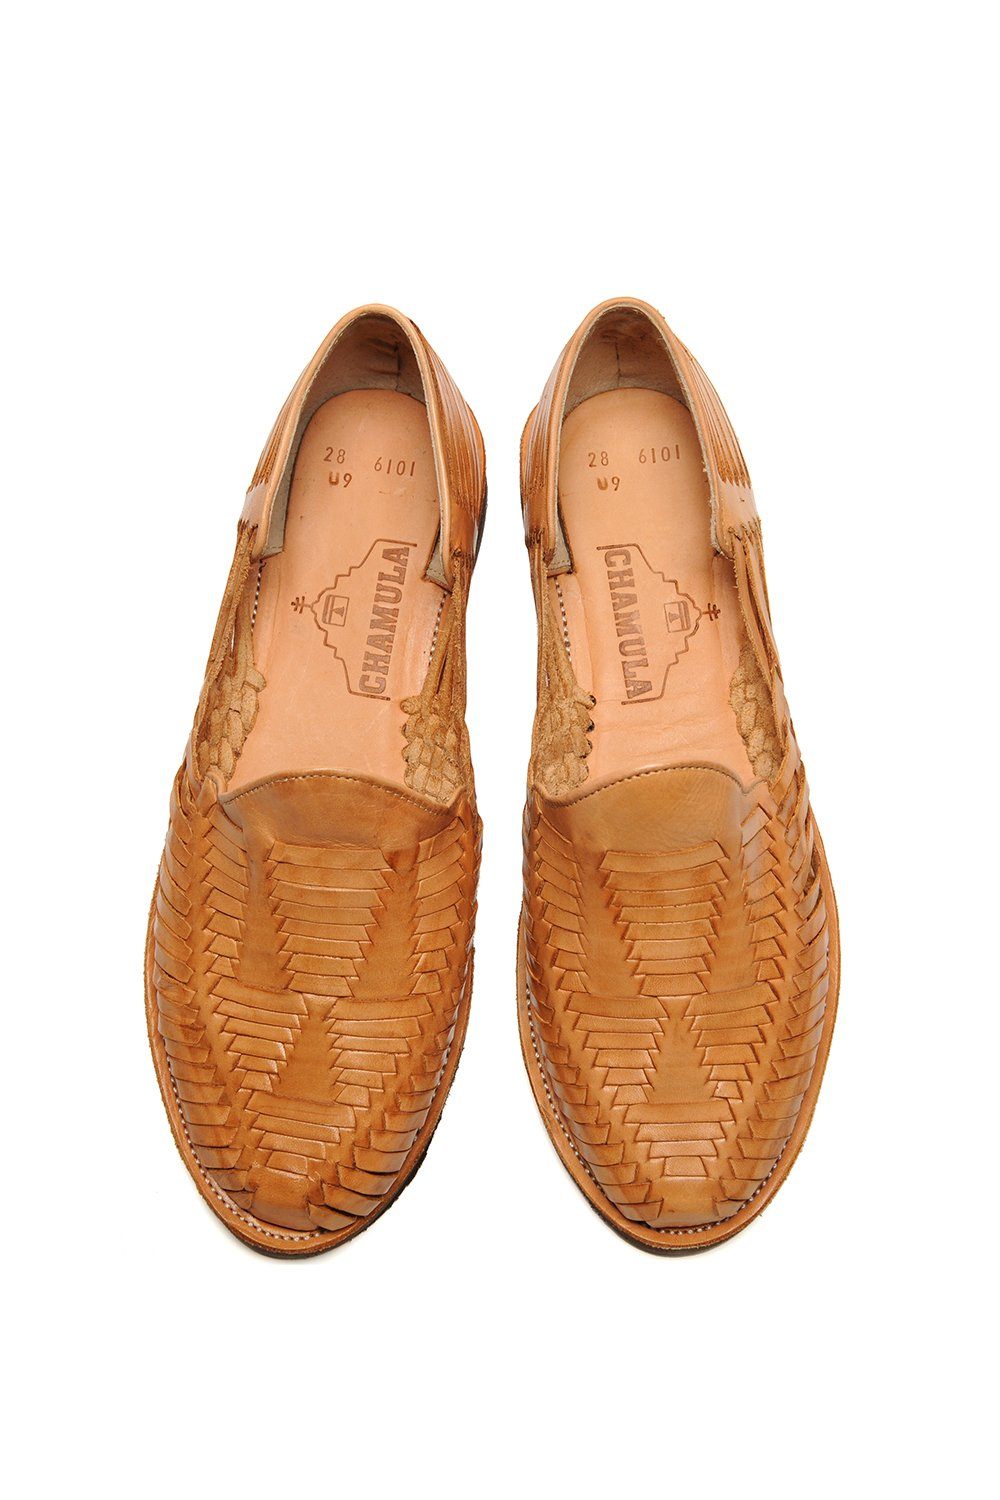 CHAMULA - Cancun Leather Huarache | Slip on Vegetable Tanned Sandals | Tan 1 - HANSEN Garments